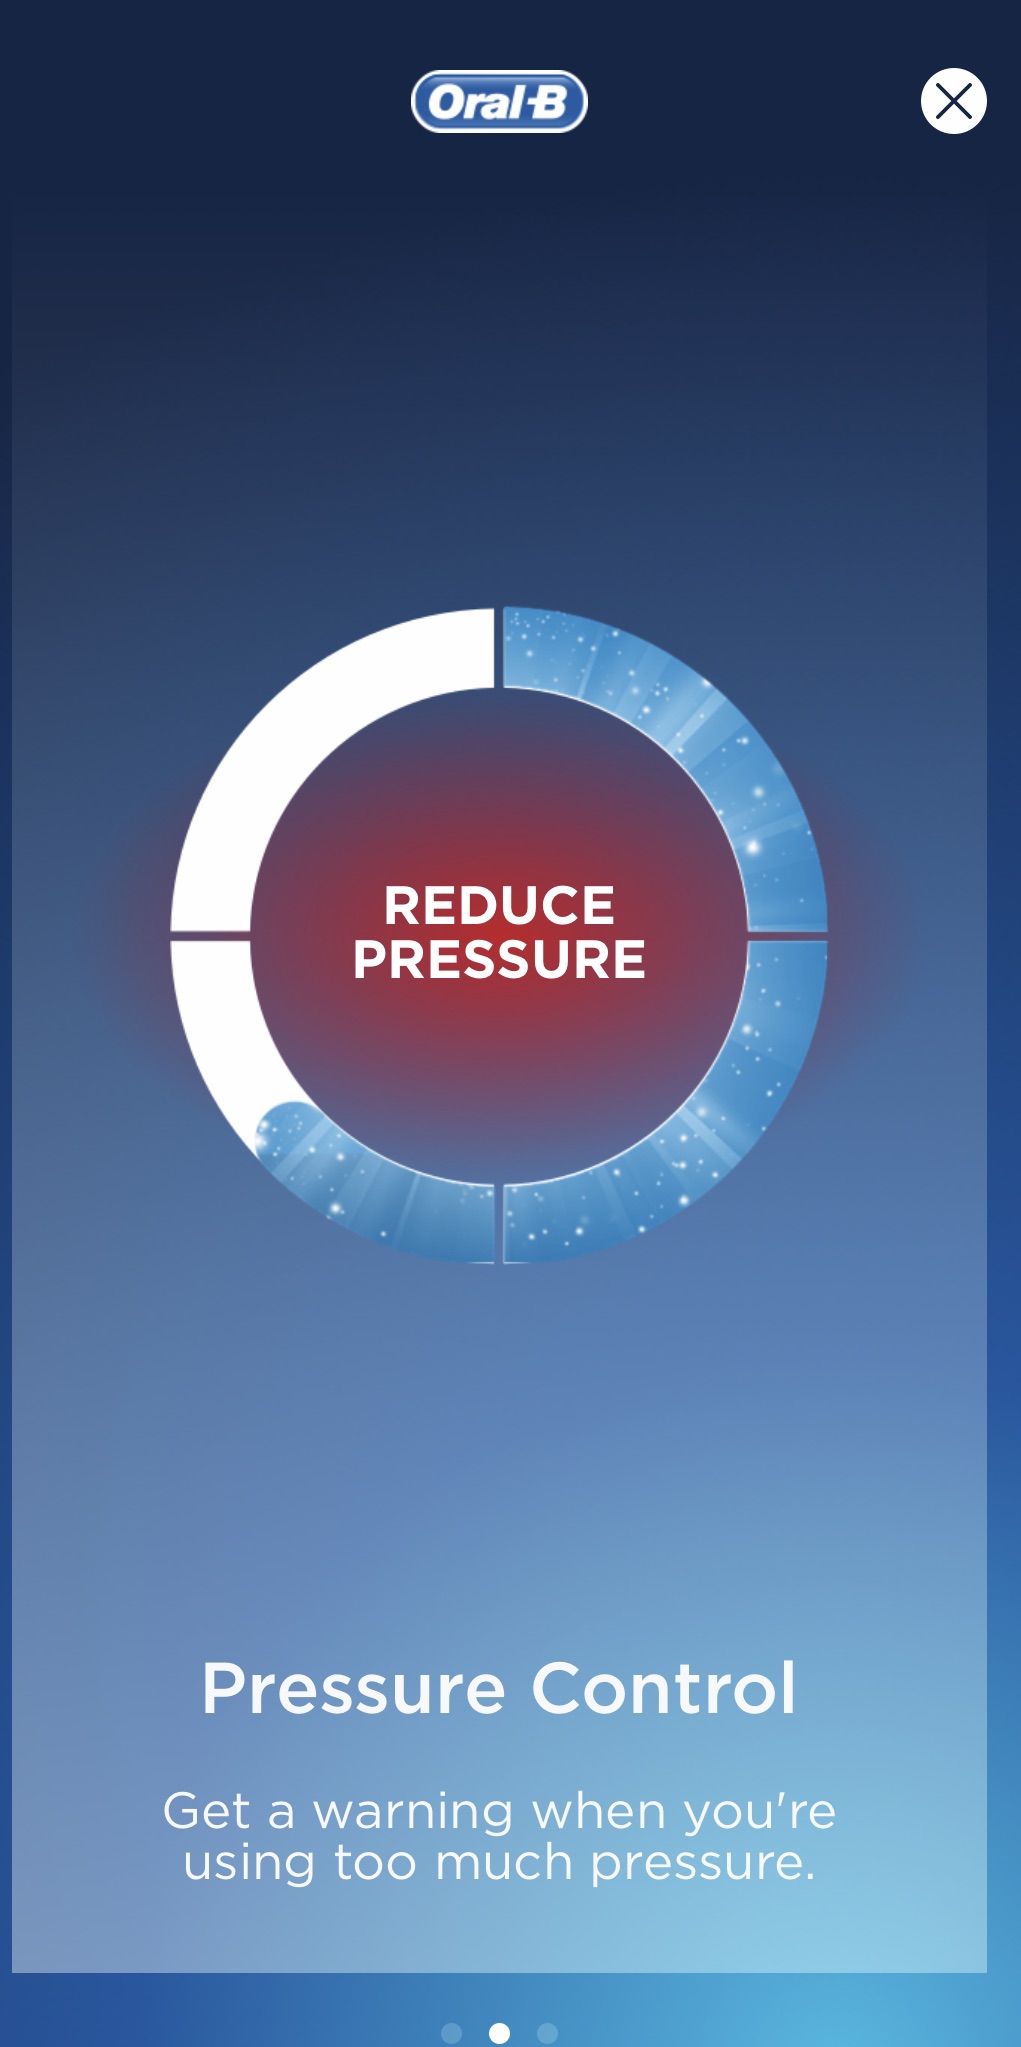 Reduce pressure oral-b